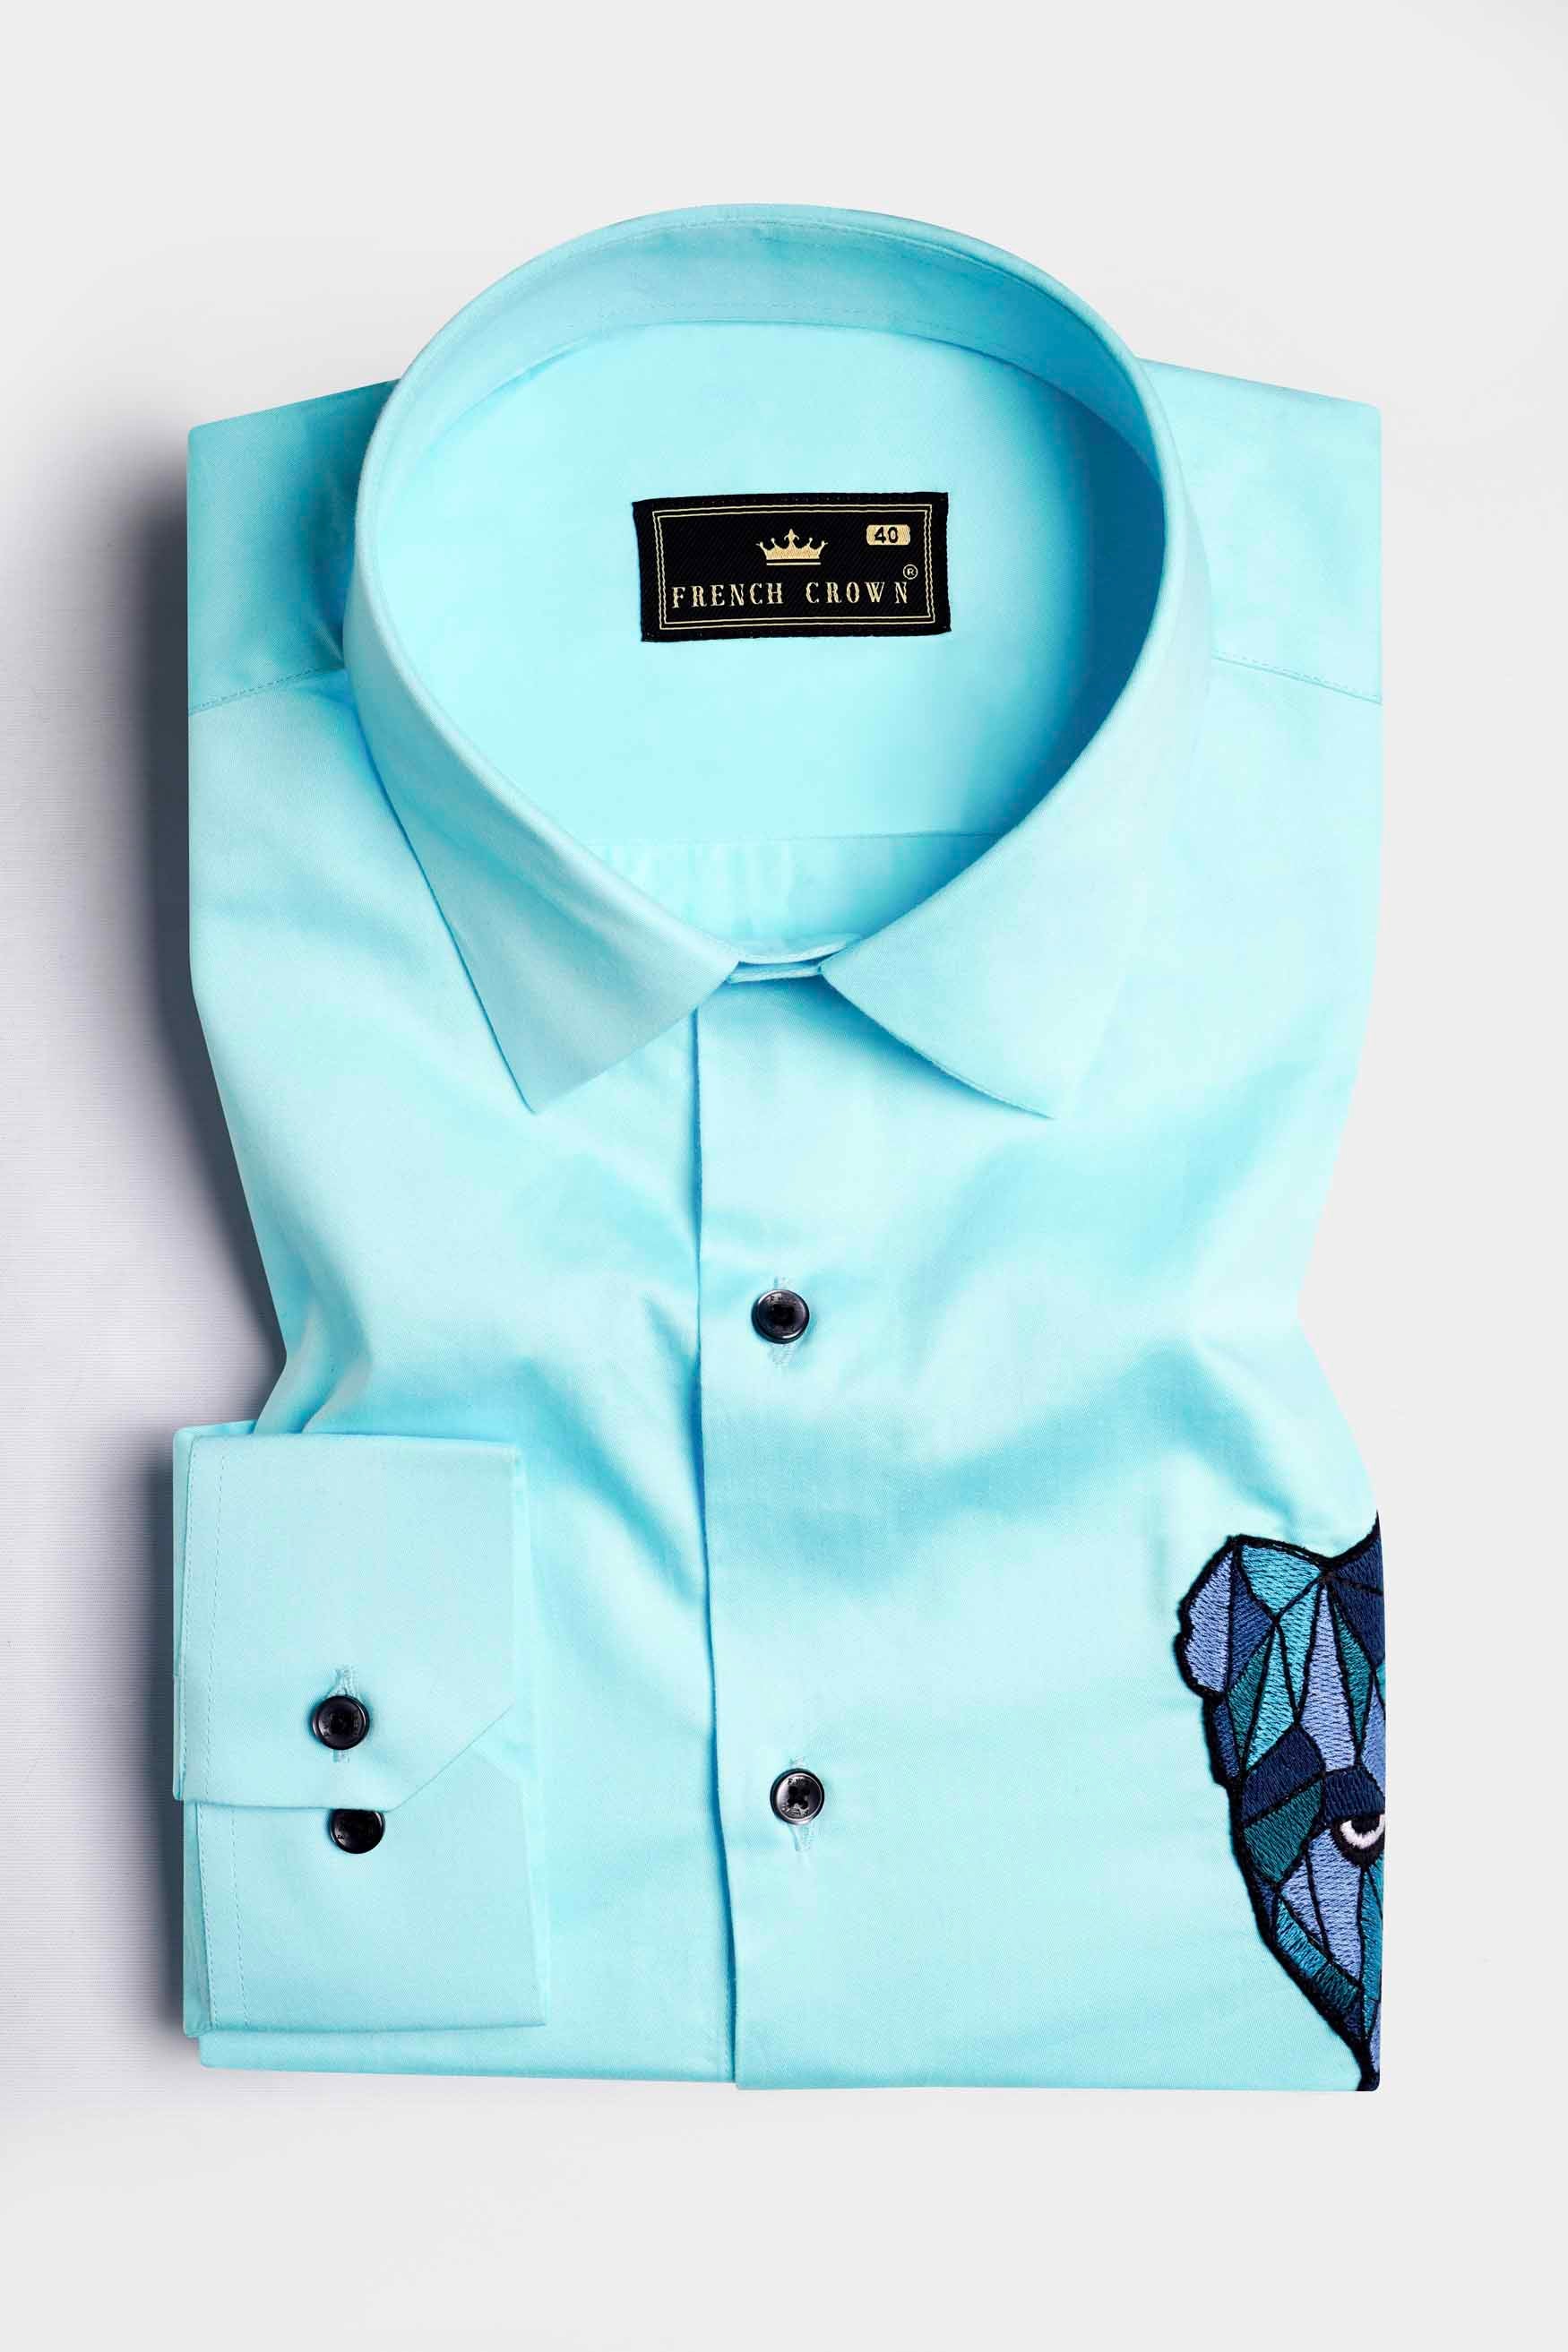 Blizzard Blue Tiger Embroidered Subtle Sheen Super Soft Premium Cotton Designer Shirt